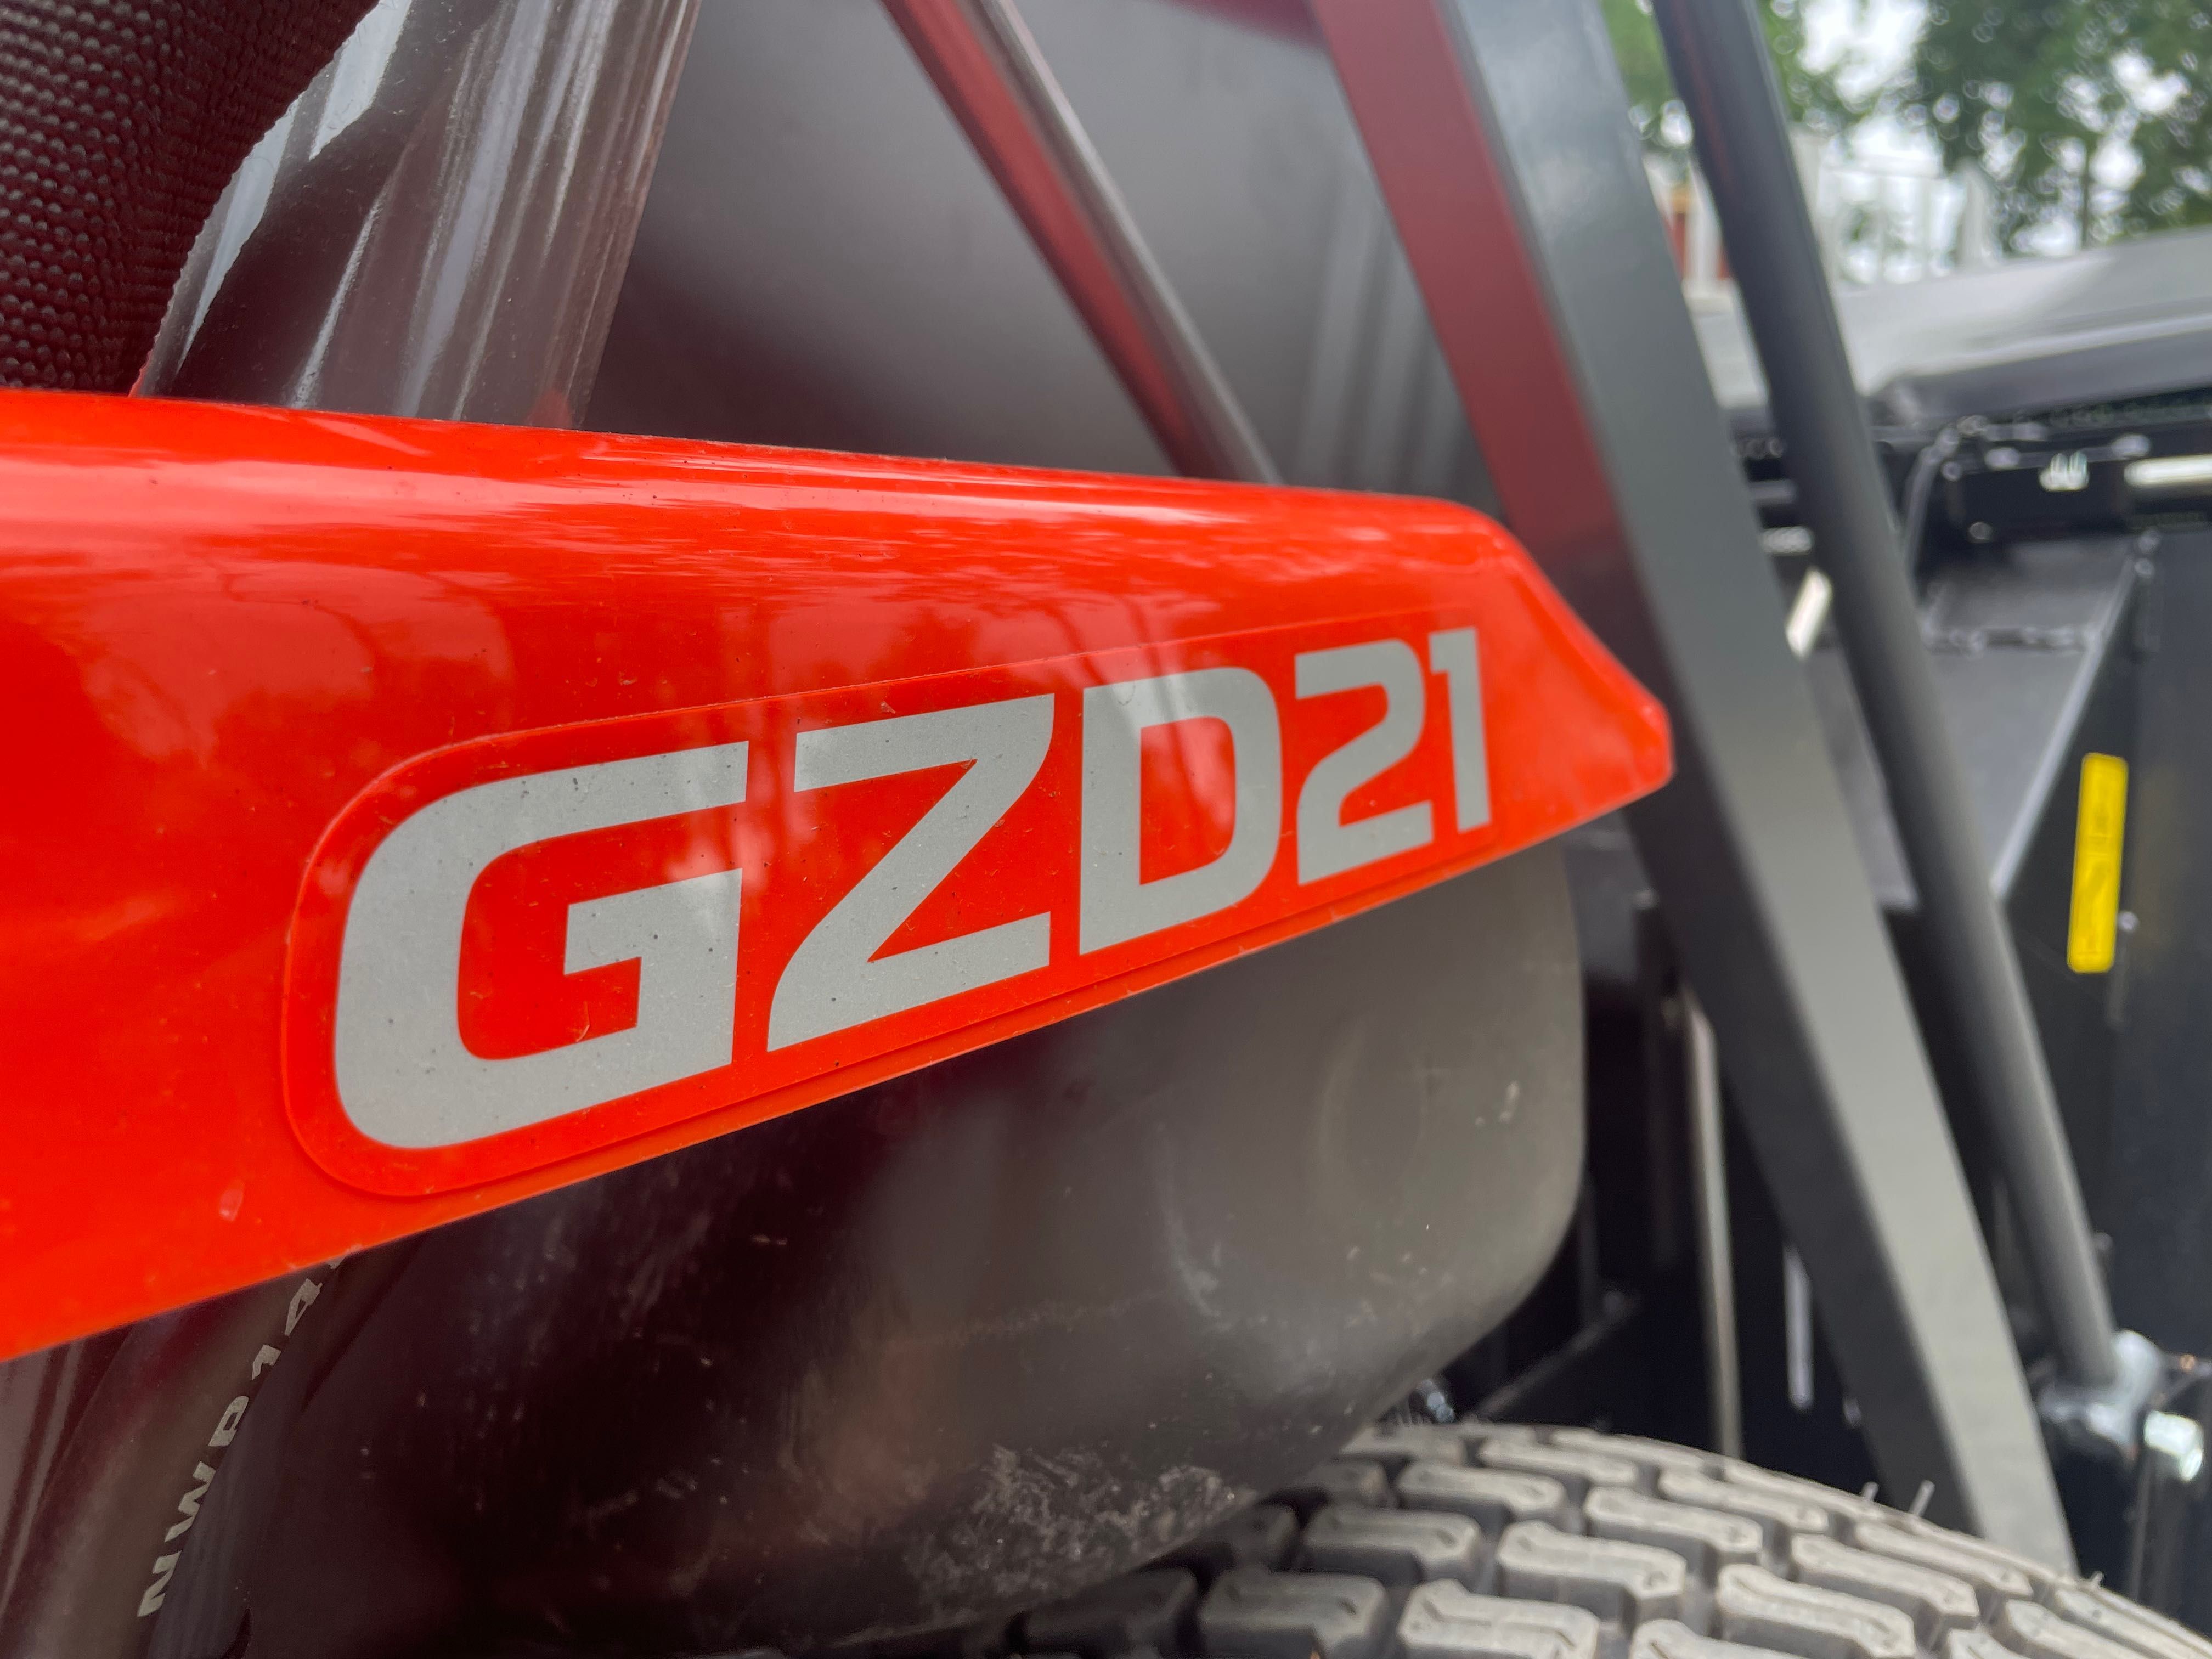 KUBOTA GZD21 HD kosiarka traktorek diesel wysoki wysyp profesjonalna